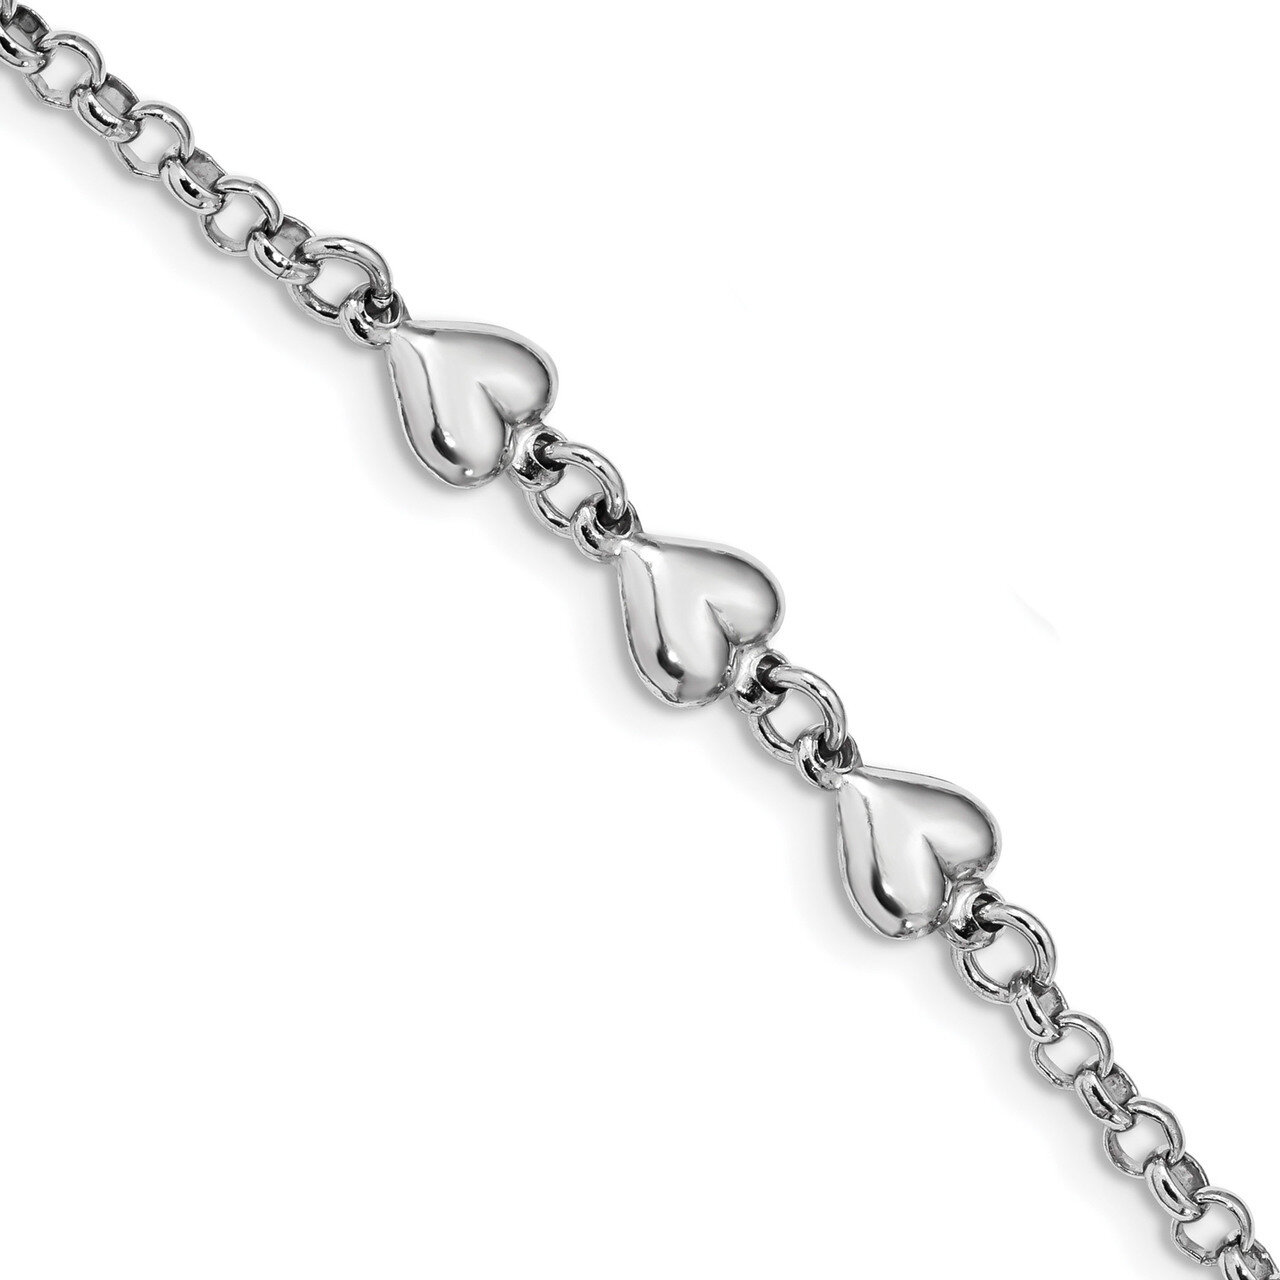 Triple Heart Charm Bracelet 7 Inch Sterling Silver Rhodium Plated Polished QG4596-7